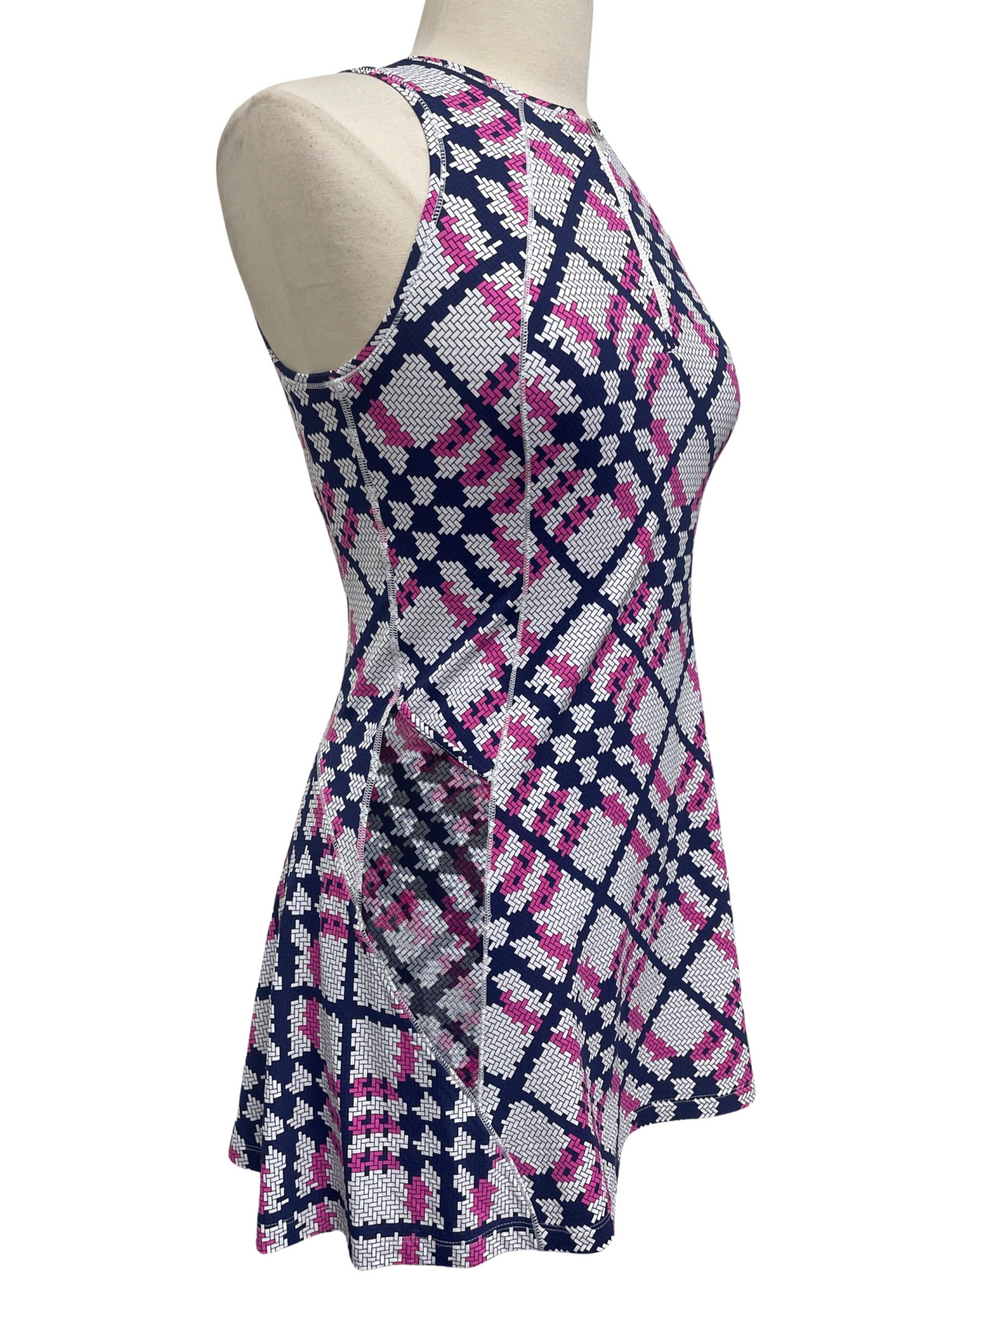 IBKUL Hot Pink/Navy Sonika Dress - Small - Skorzie